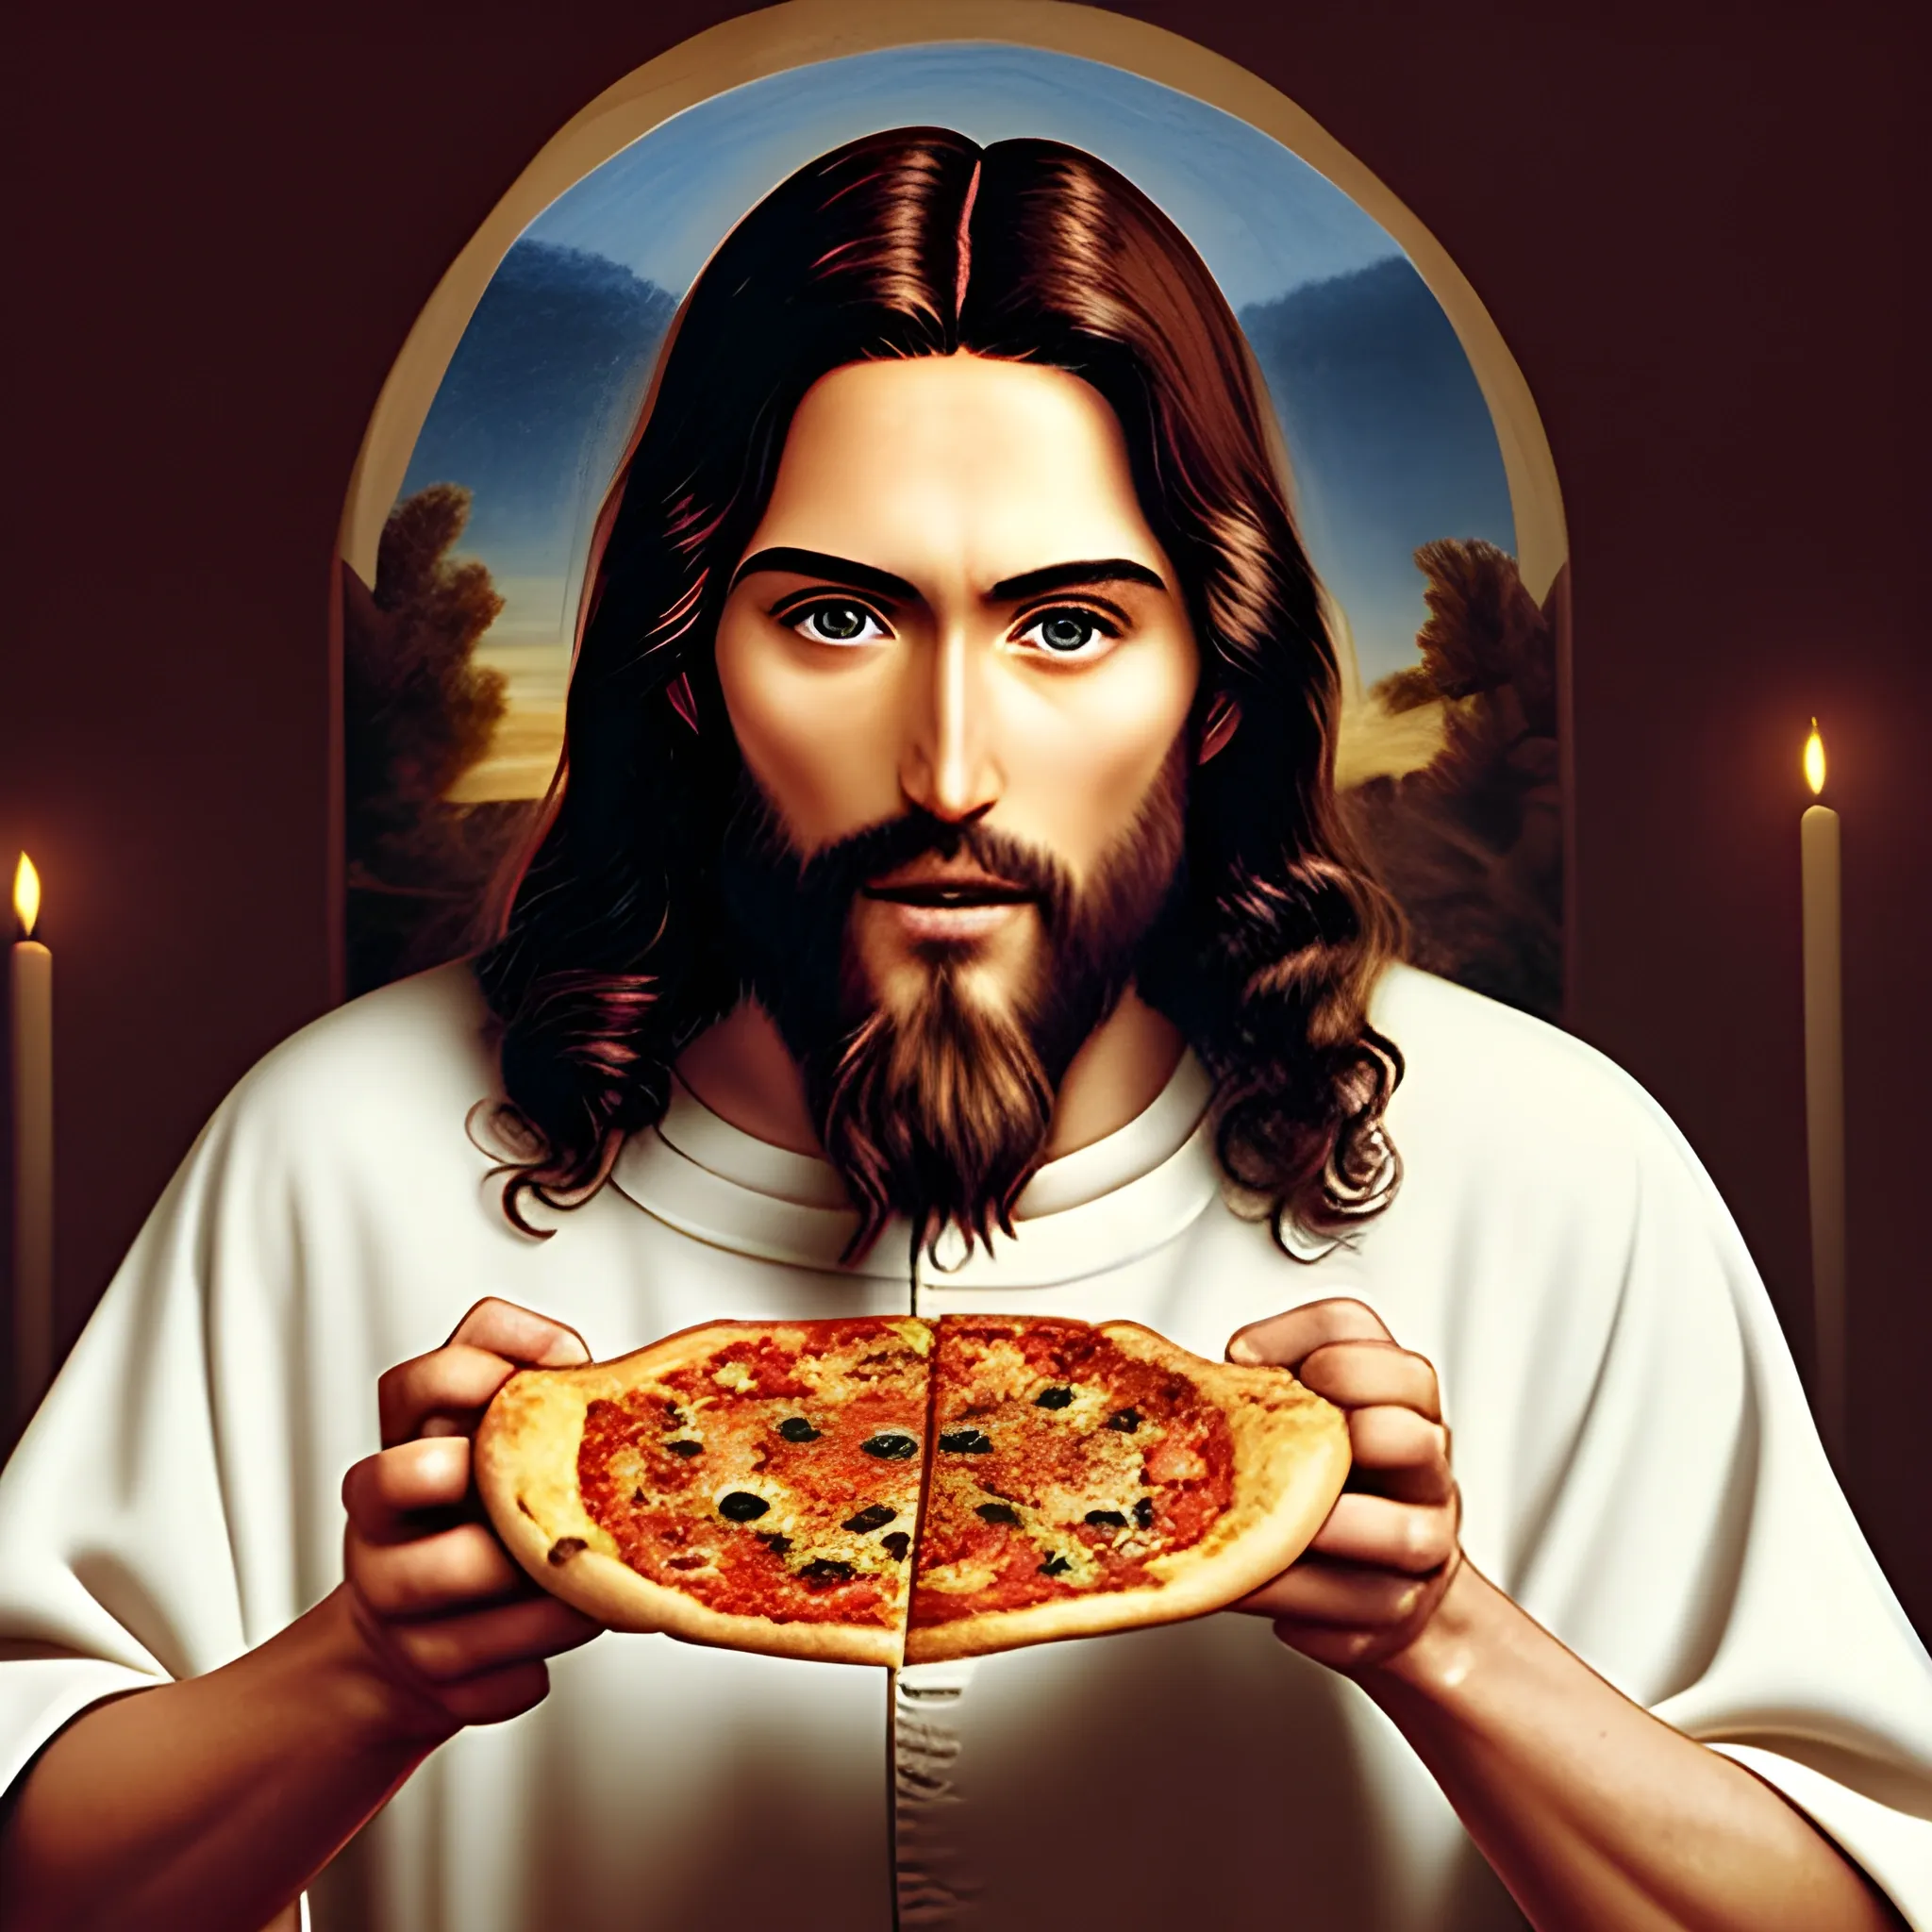 Jesus eating pizza
